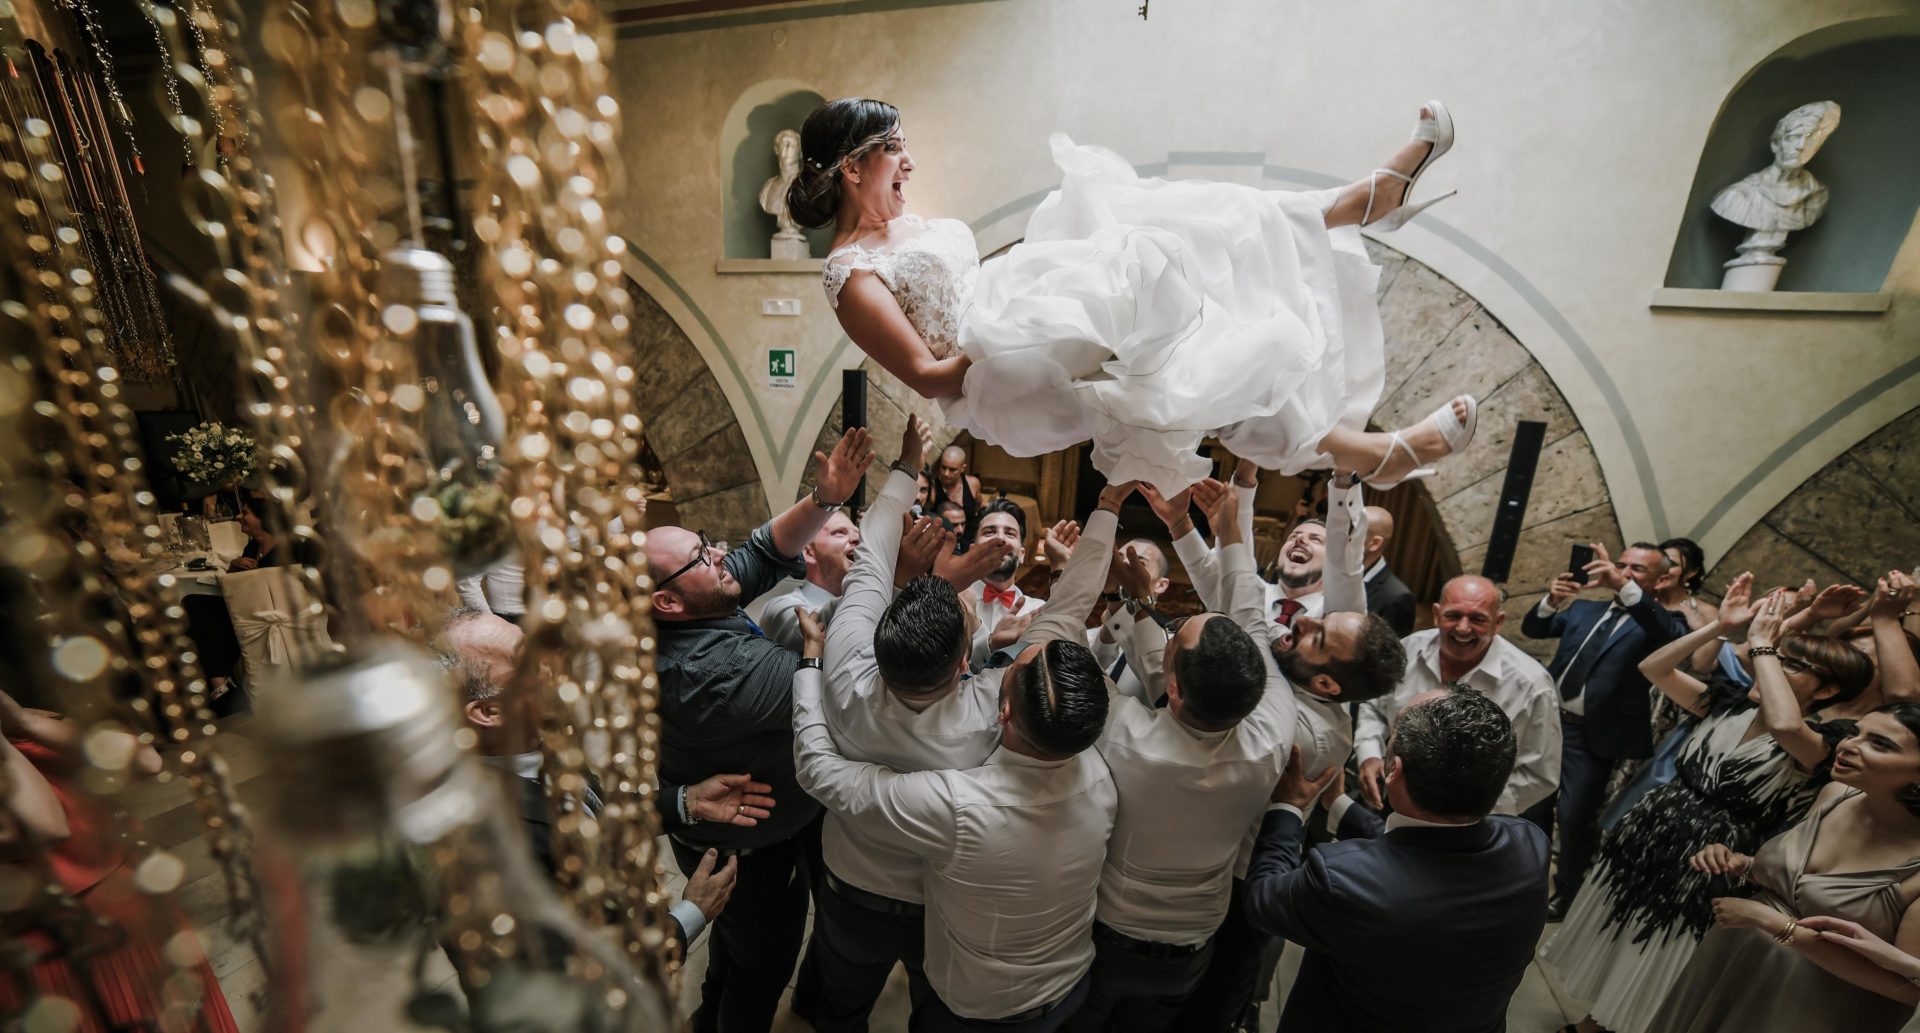 Antonio Chiriatti Wedding Photographer